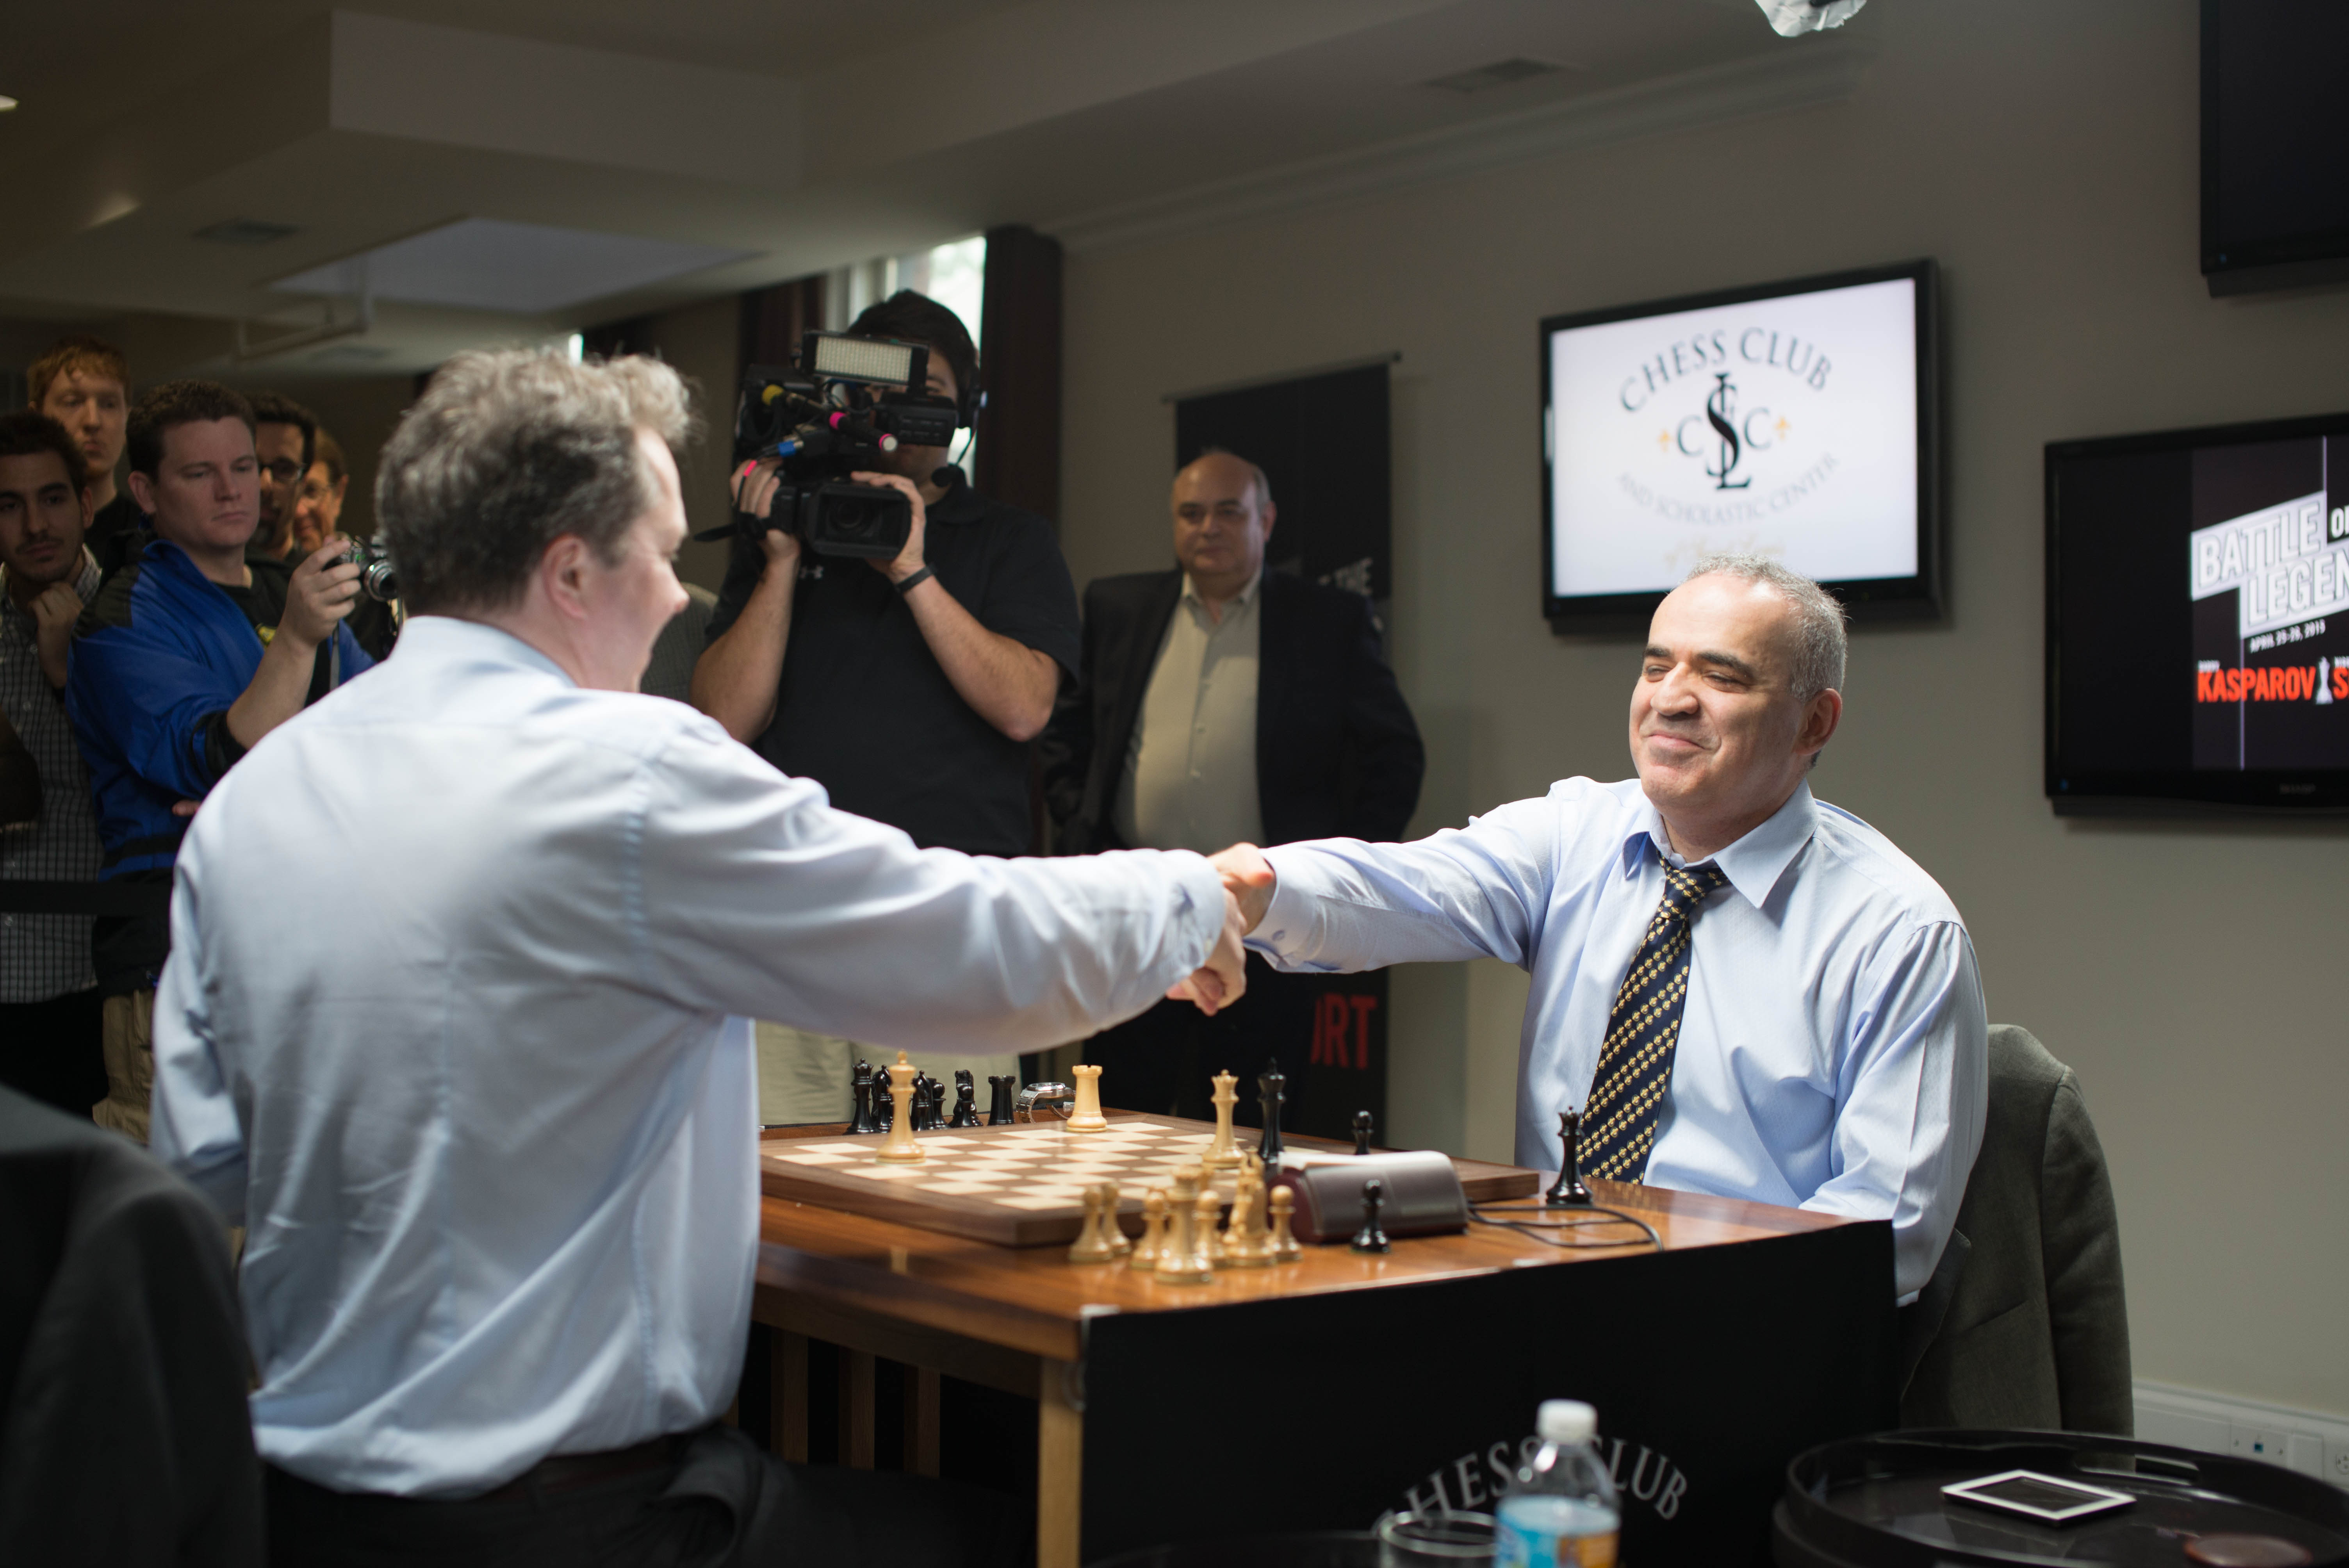 Immortal Games of Chess! Garry Kasparov vs. Nigel Short London